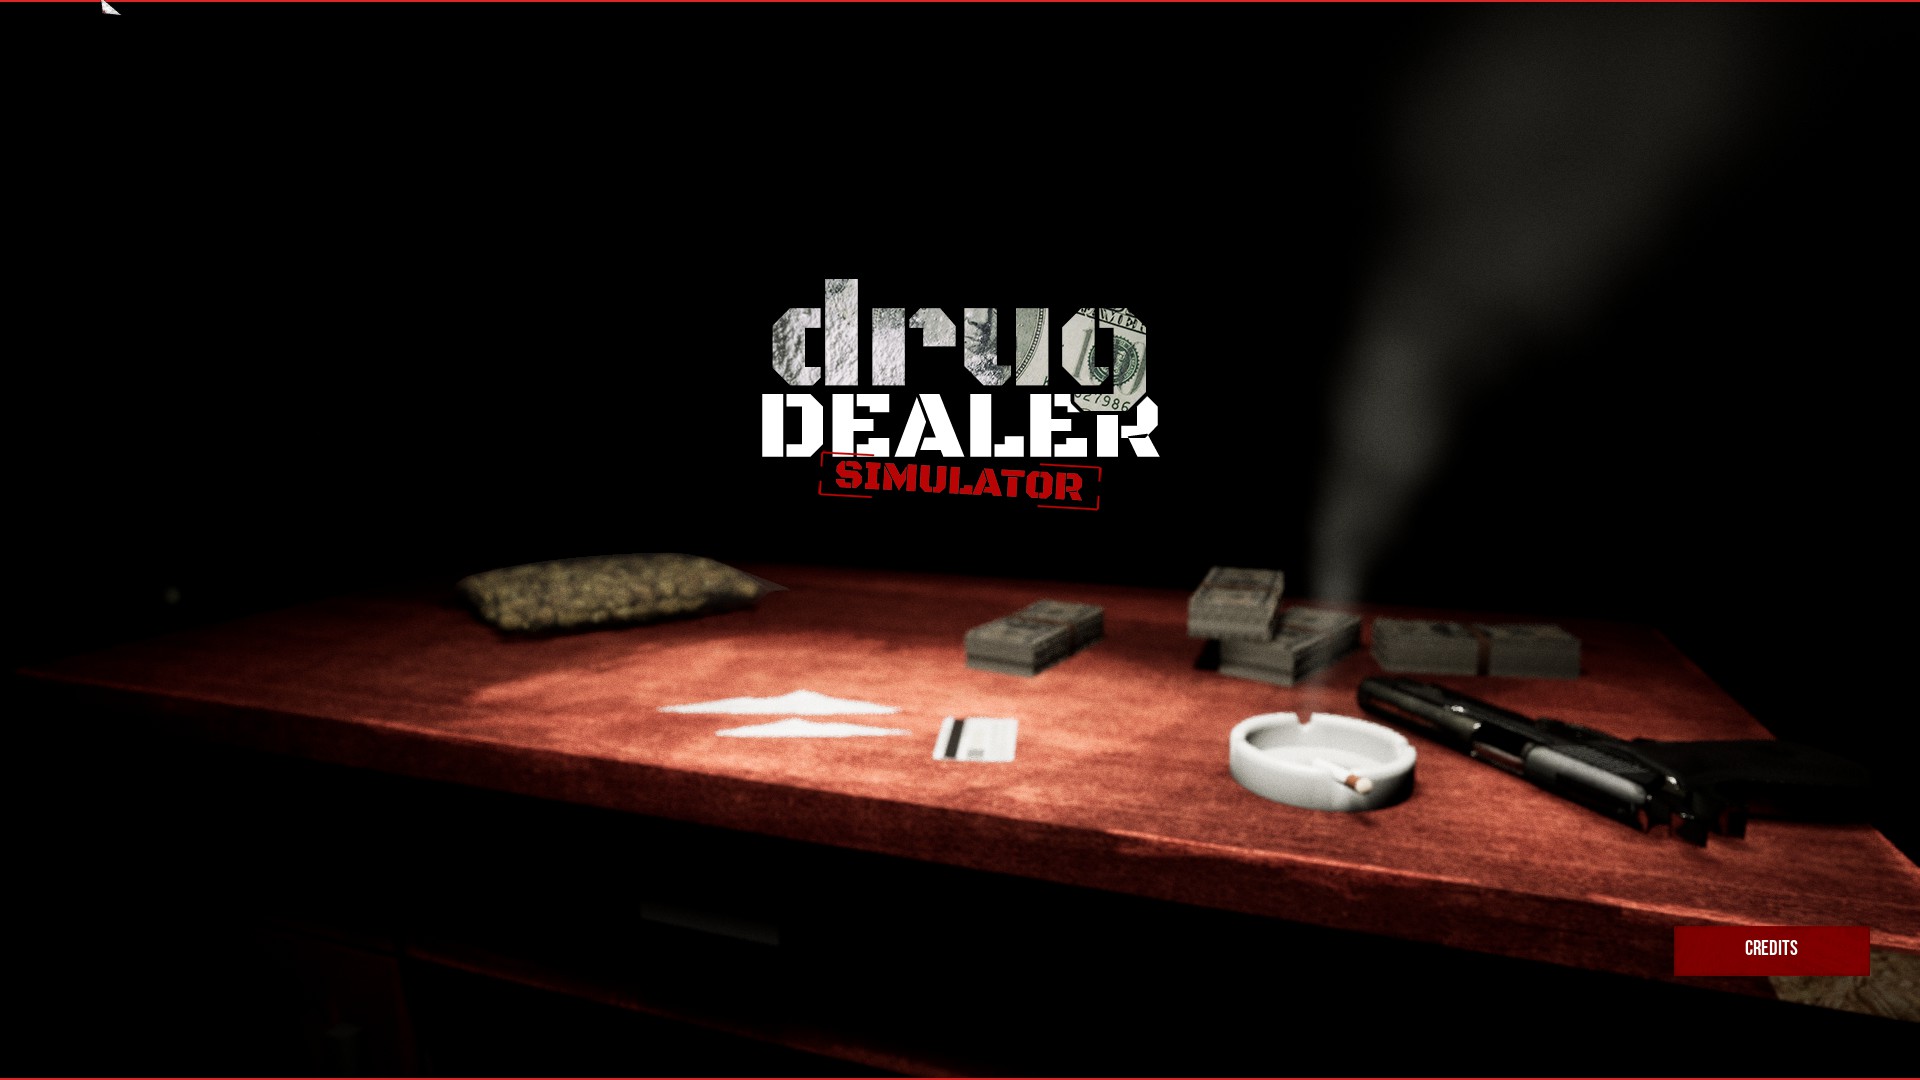 drug dealer simulator guns